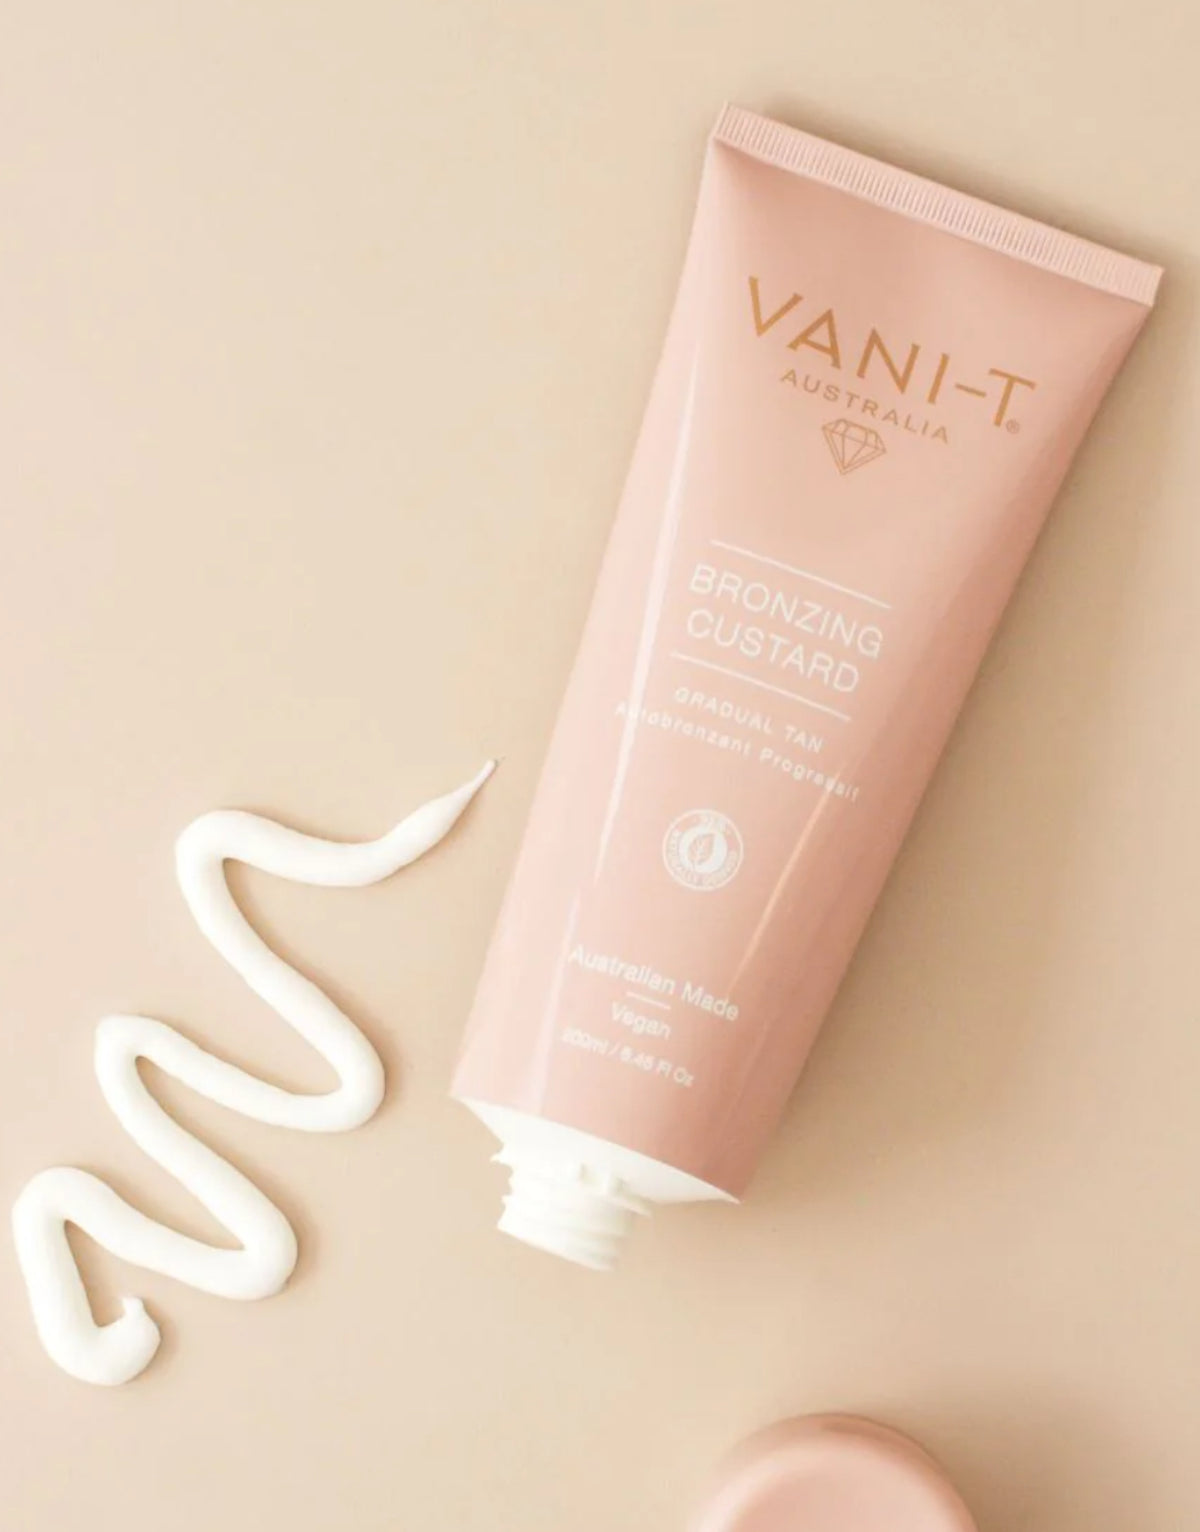 Tanning | VaniT Bronzing Custard